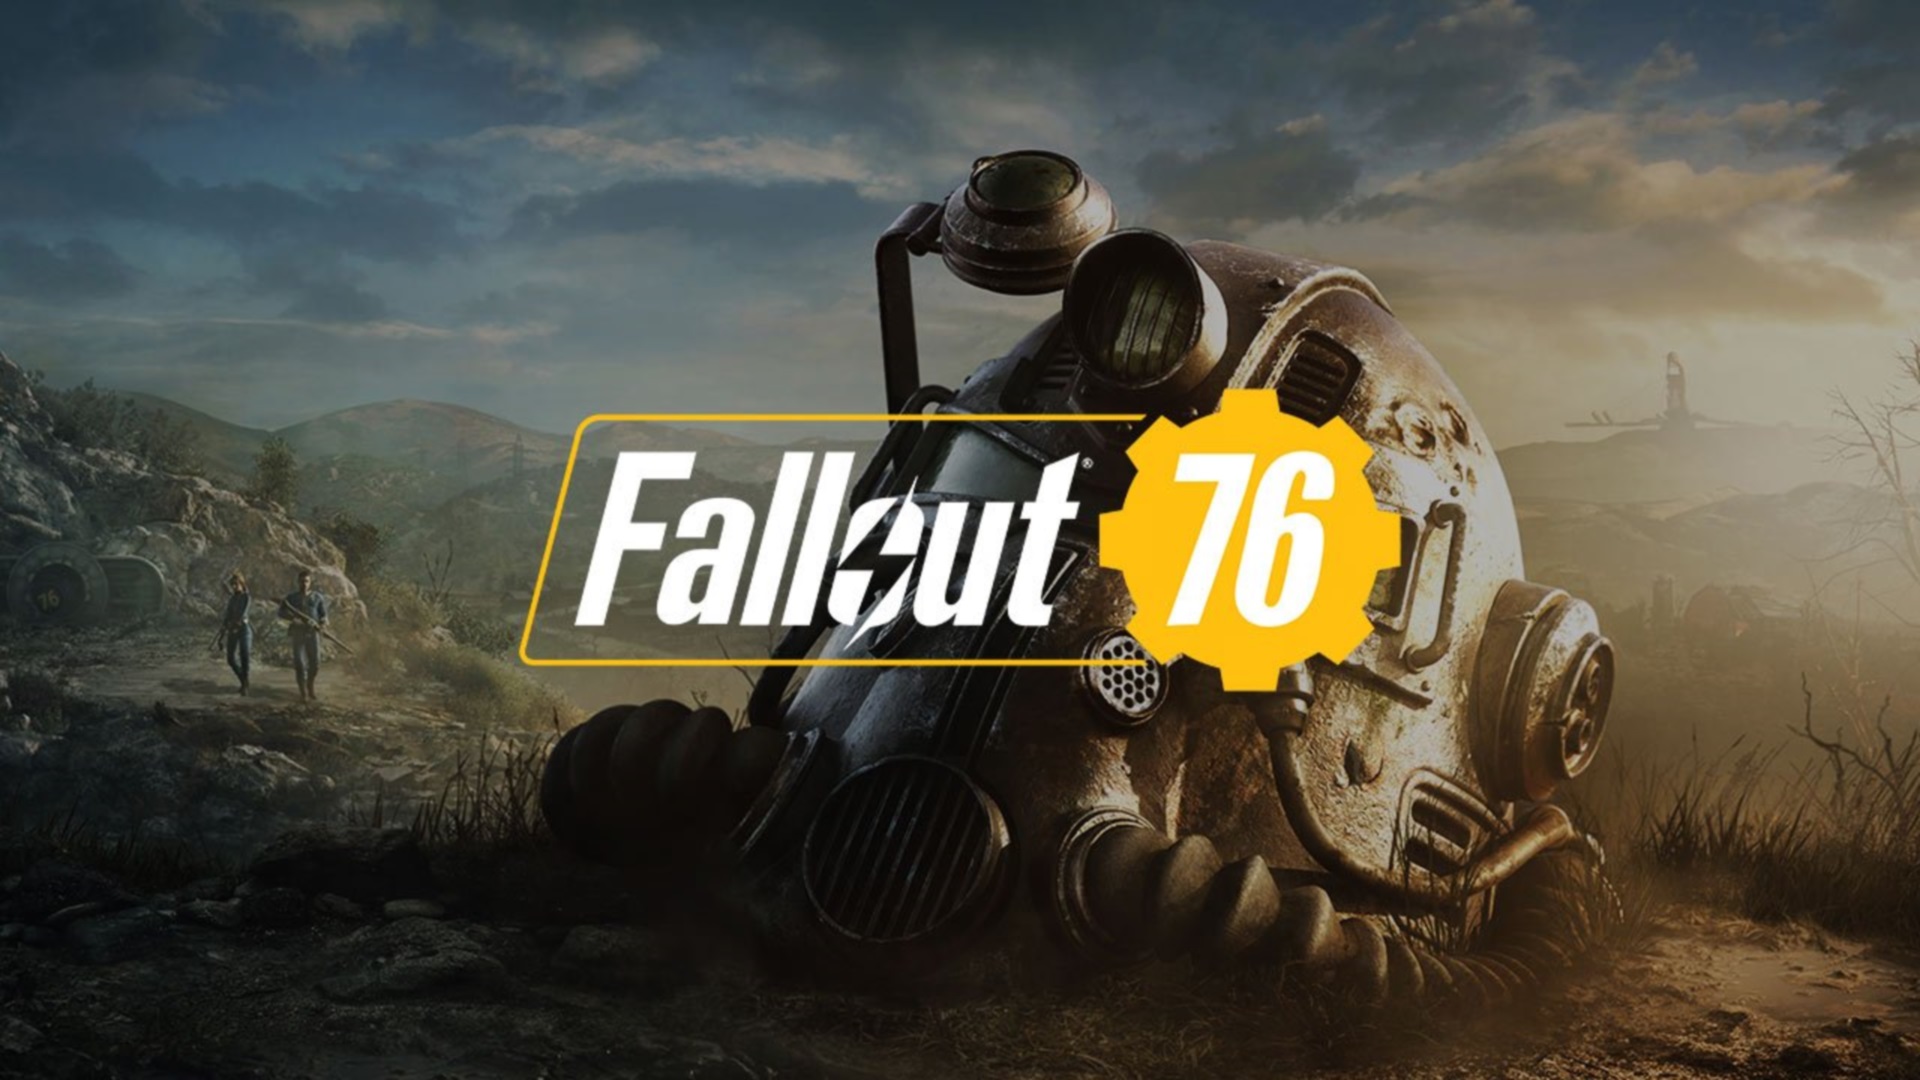 Saga de videojuegos «Fallout» será una serie televisiva de Amazon